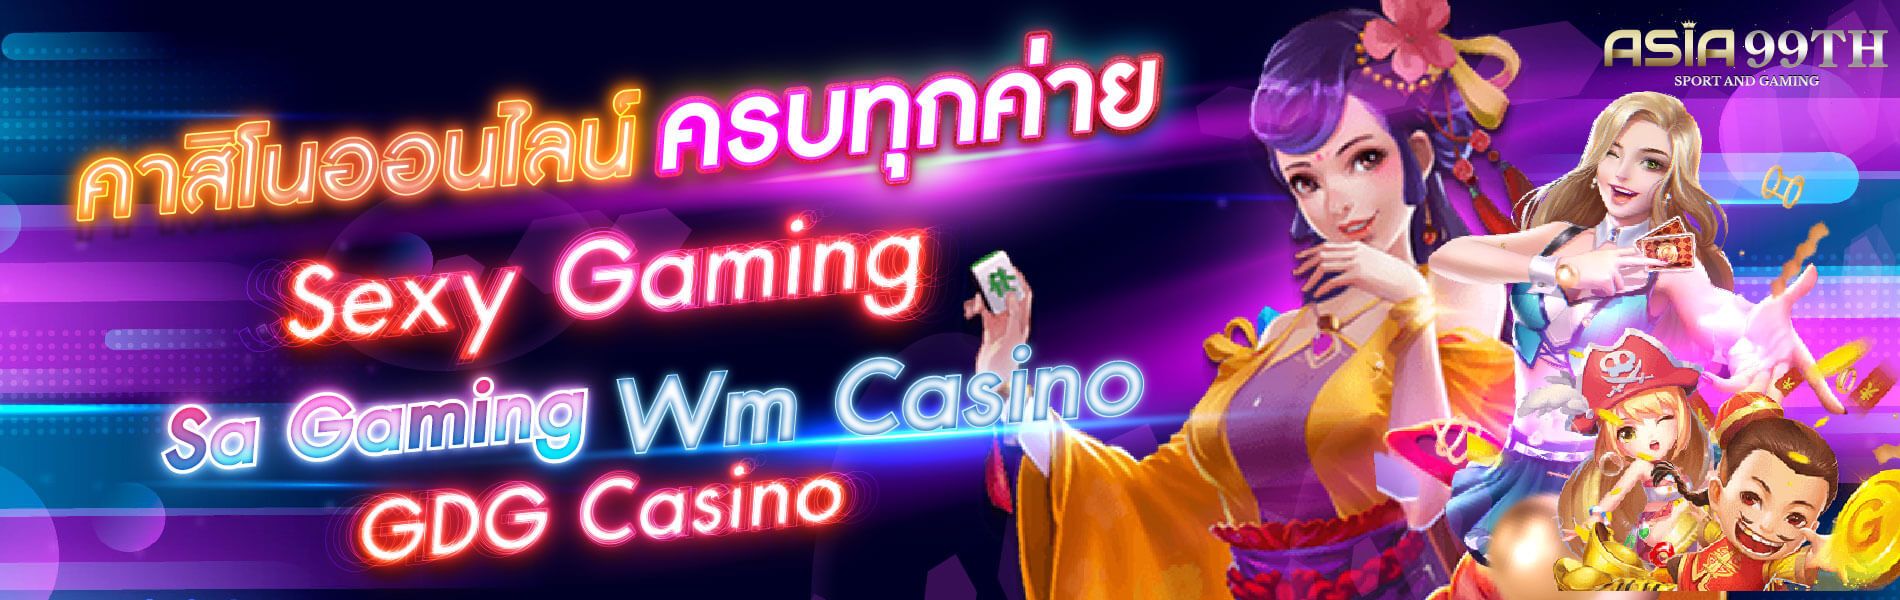 58c5db339332b075e1162fd27fa785d2.คาสิโนออนไลน์-ครบทุกค่าย-Sexy-Gaming-Sa-Gaming-Wm-Casino-GDG-Casino